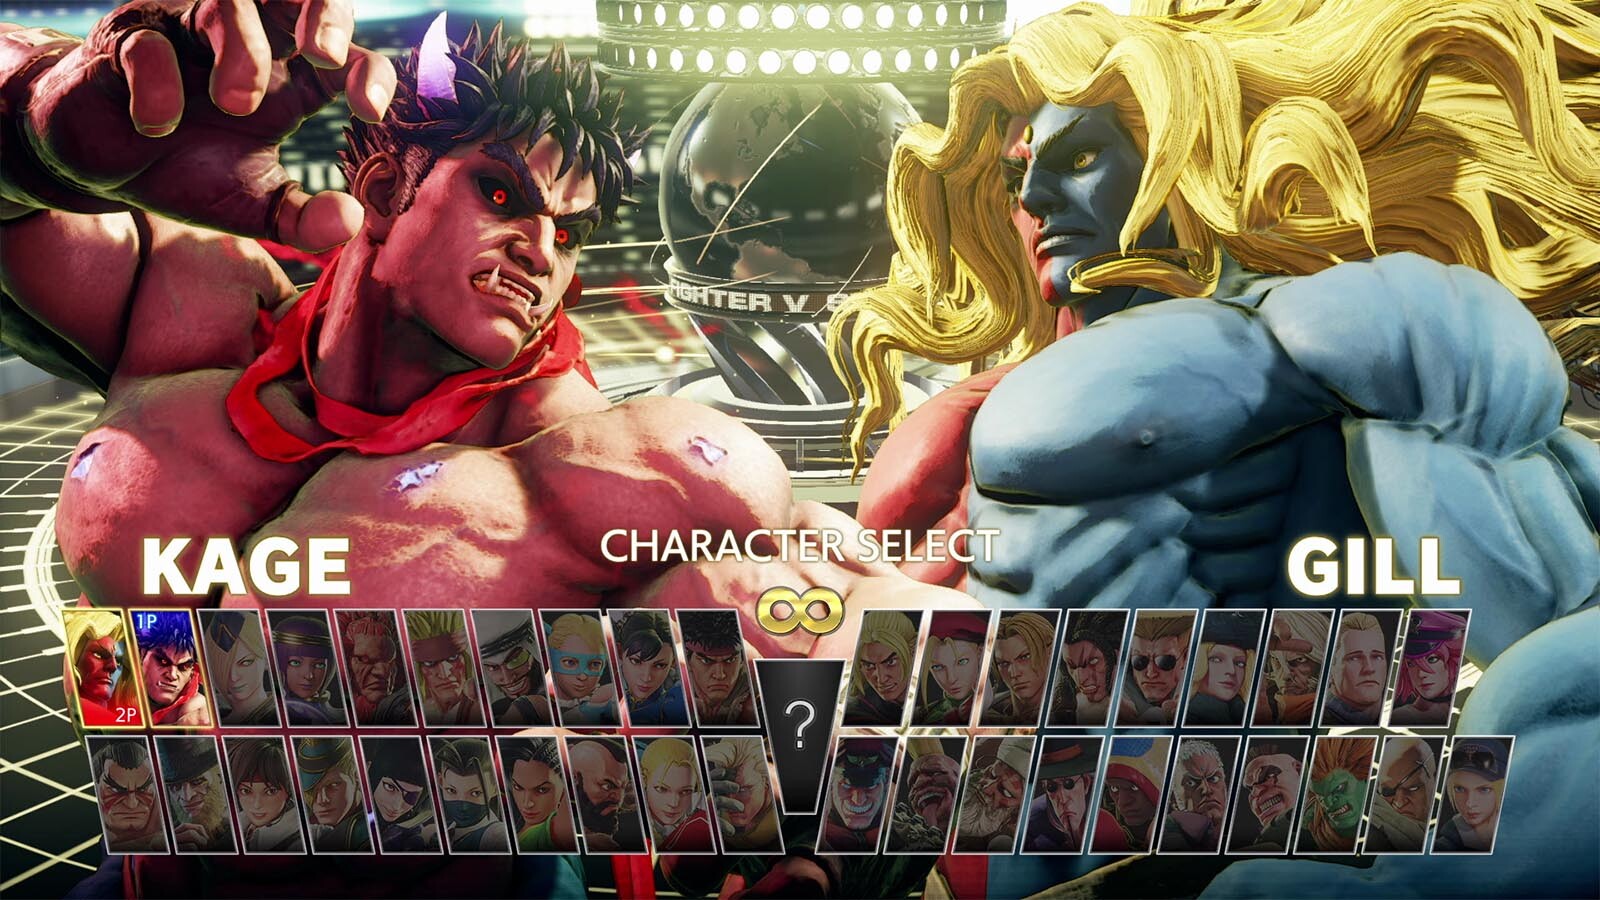 Street Fighter V 5 Champion Edition [Upgrade Kit] PC Steam Key